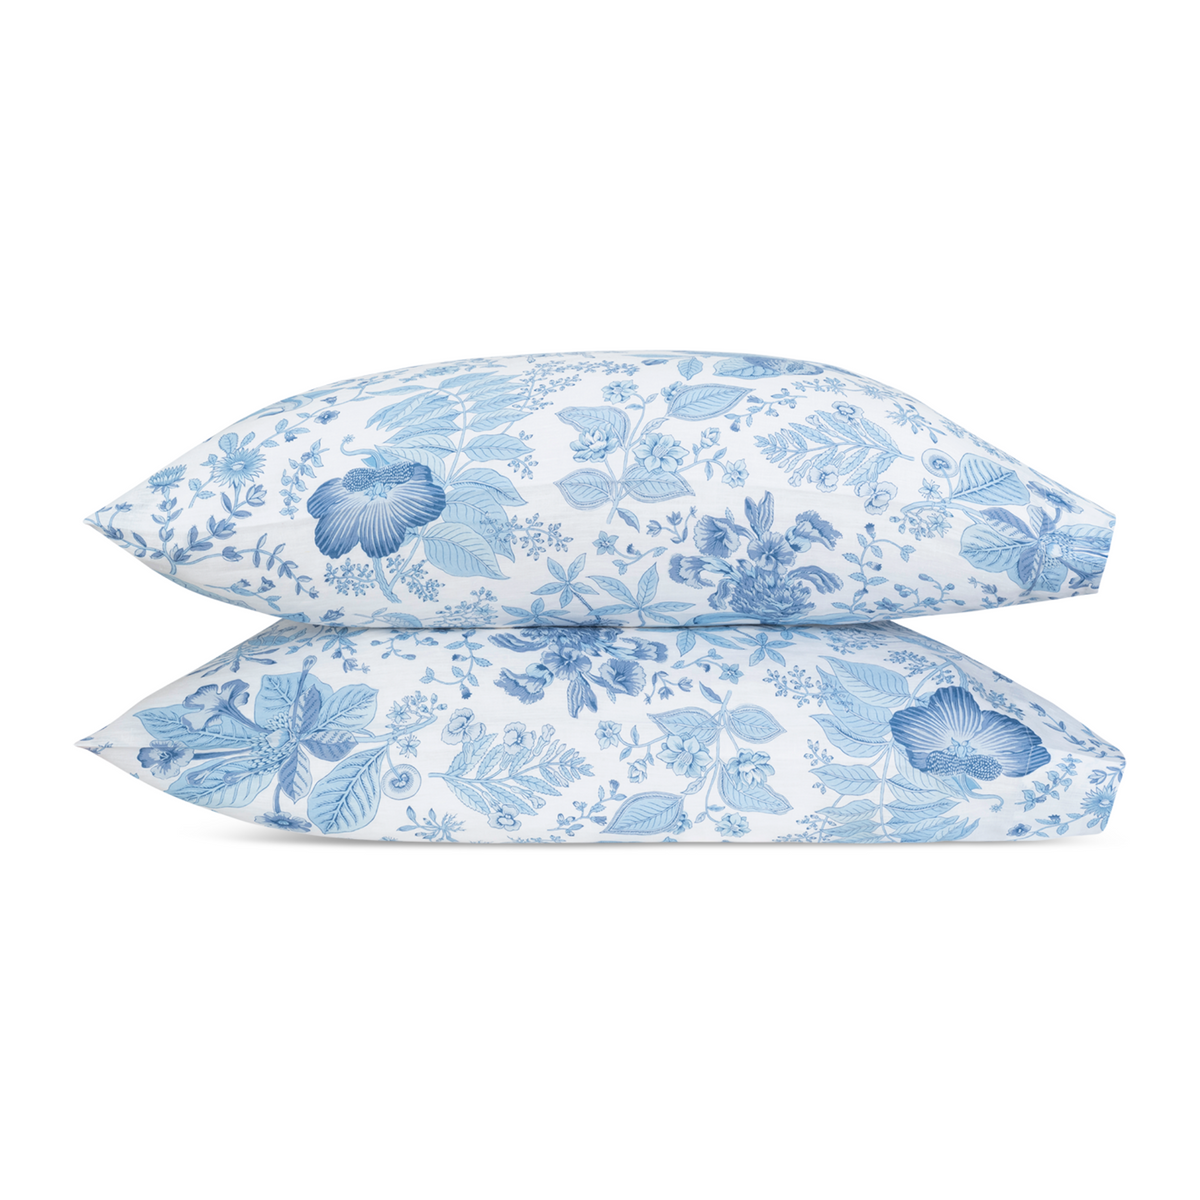 Pair of Pillowcases of Matouk Schumacher Pomegranate Linen Bedding in Porcelain Blue Color